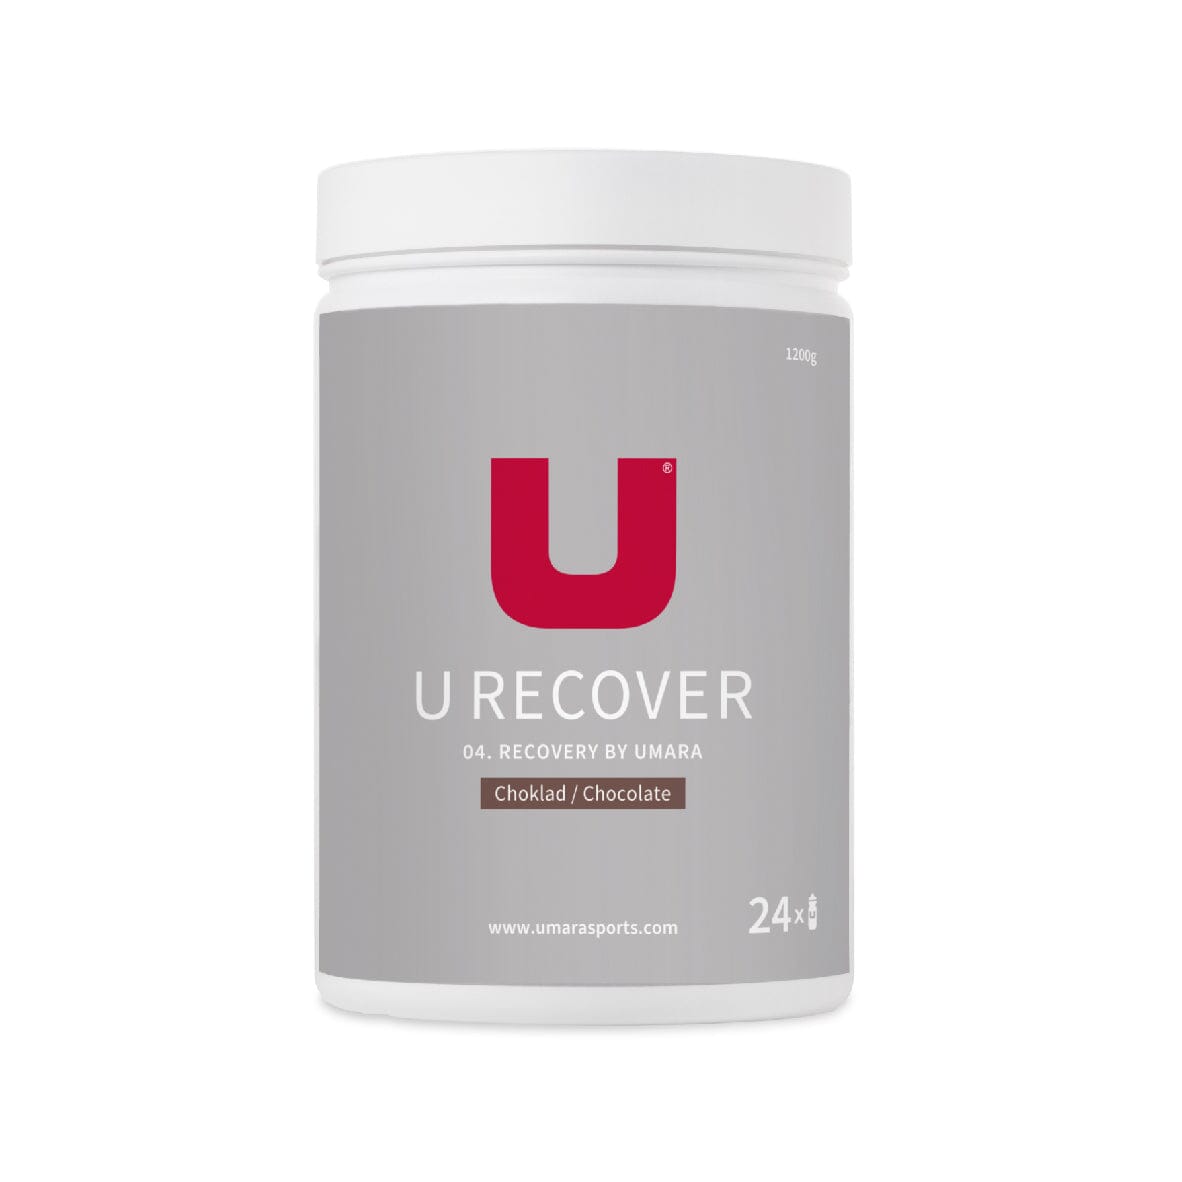 UMARA U RECOVER 1200g Recovery Drink Mix Vanilla 